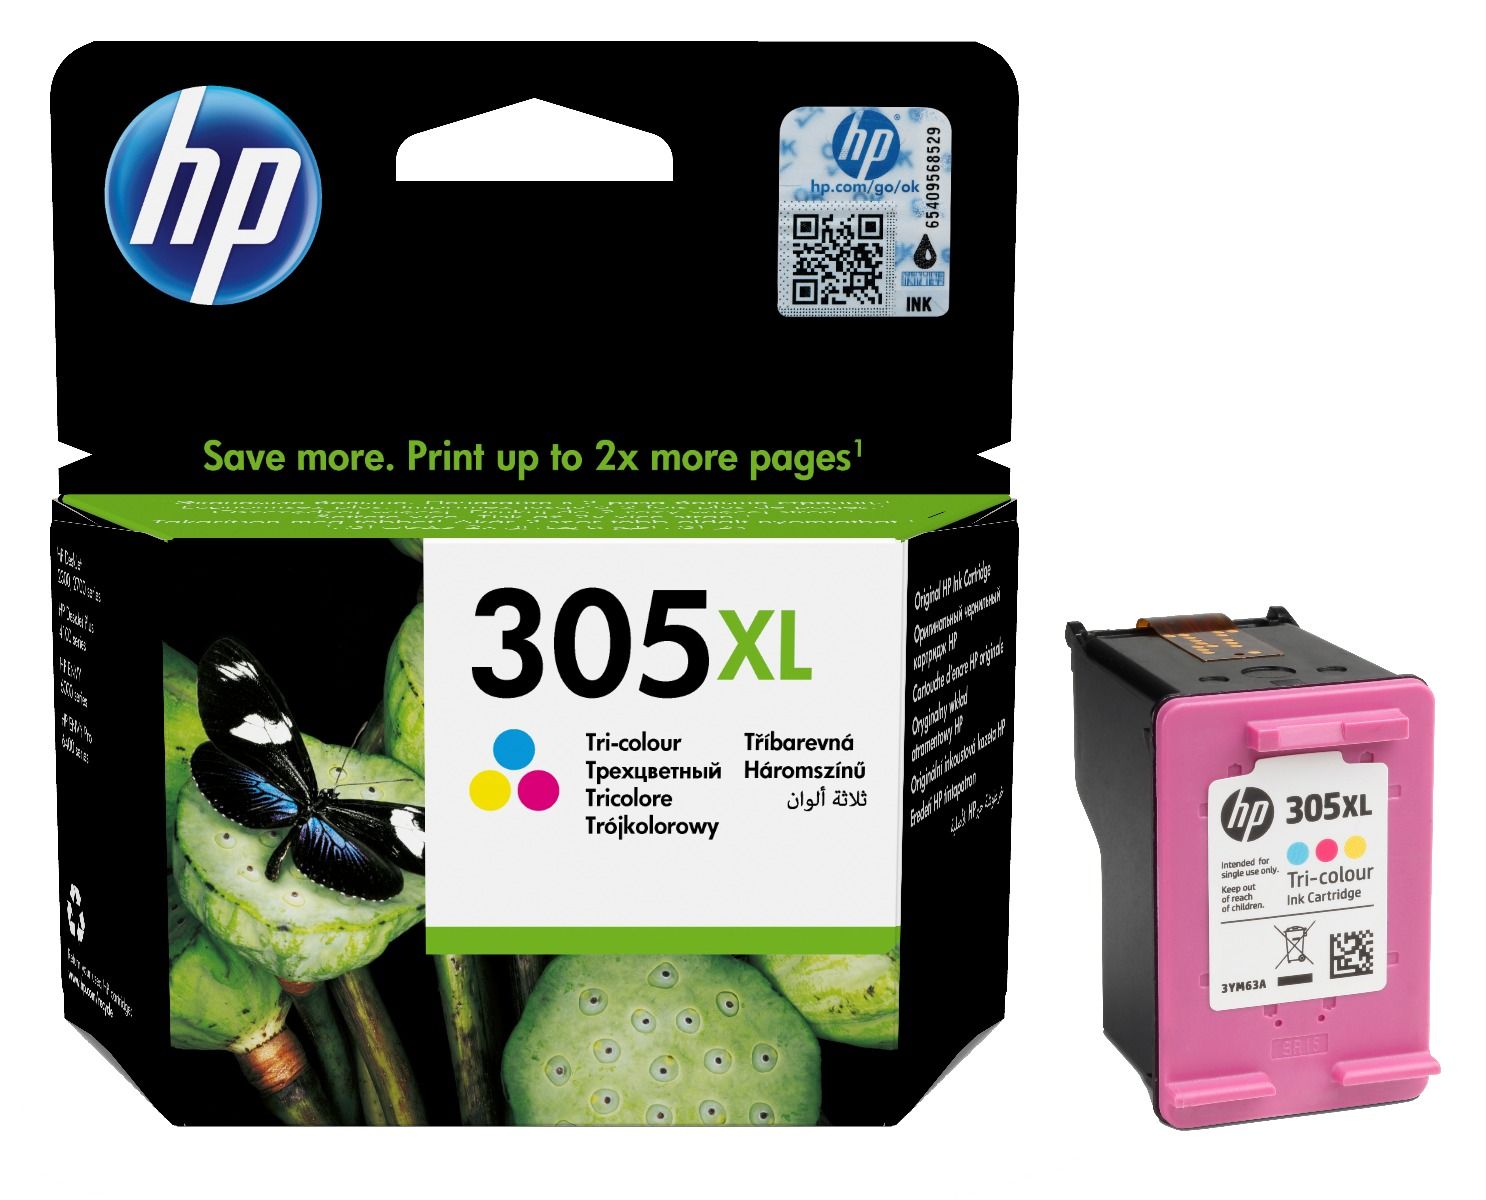 HP Deskjet 2720e Ink Cartridges